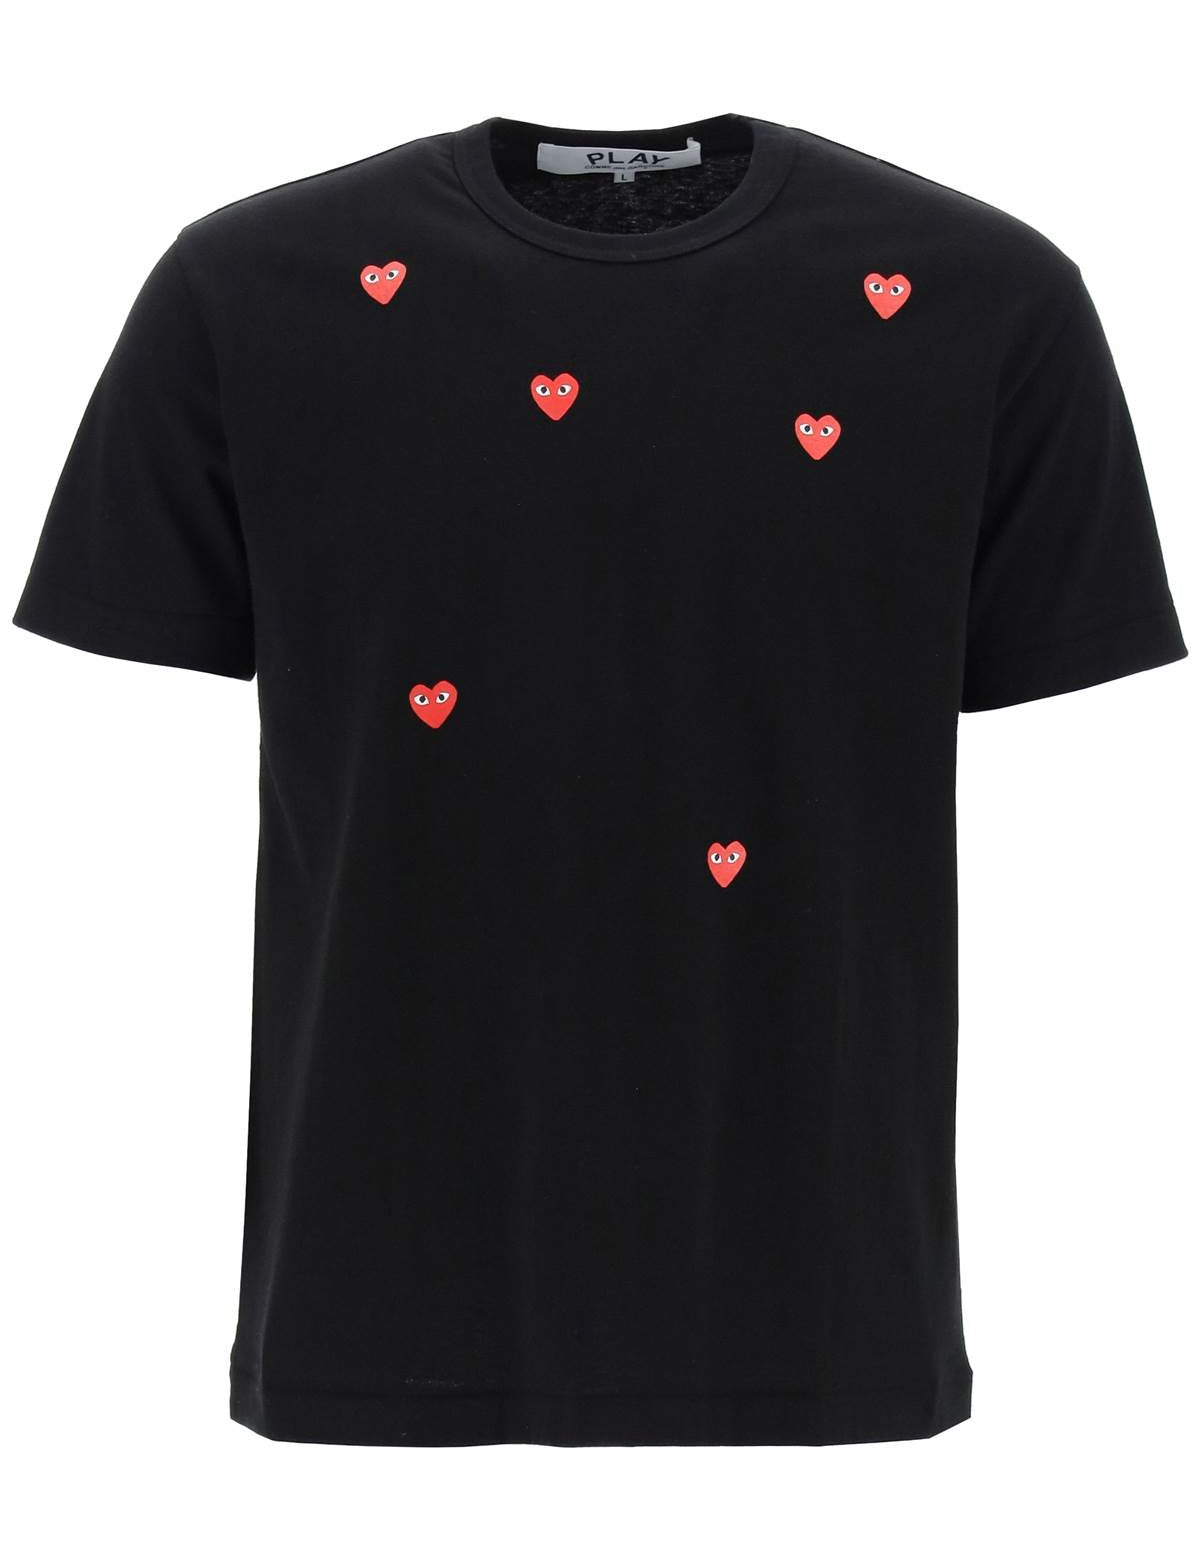 round-neck-t-shirt-with-heart-pattern.jpg